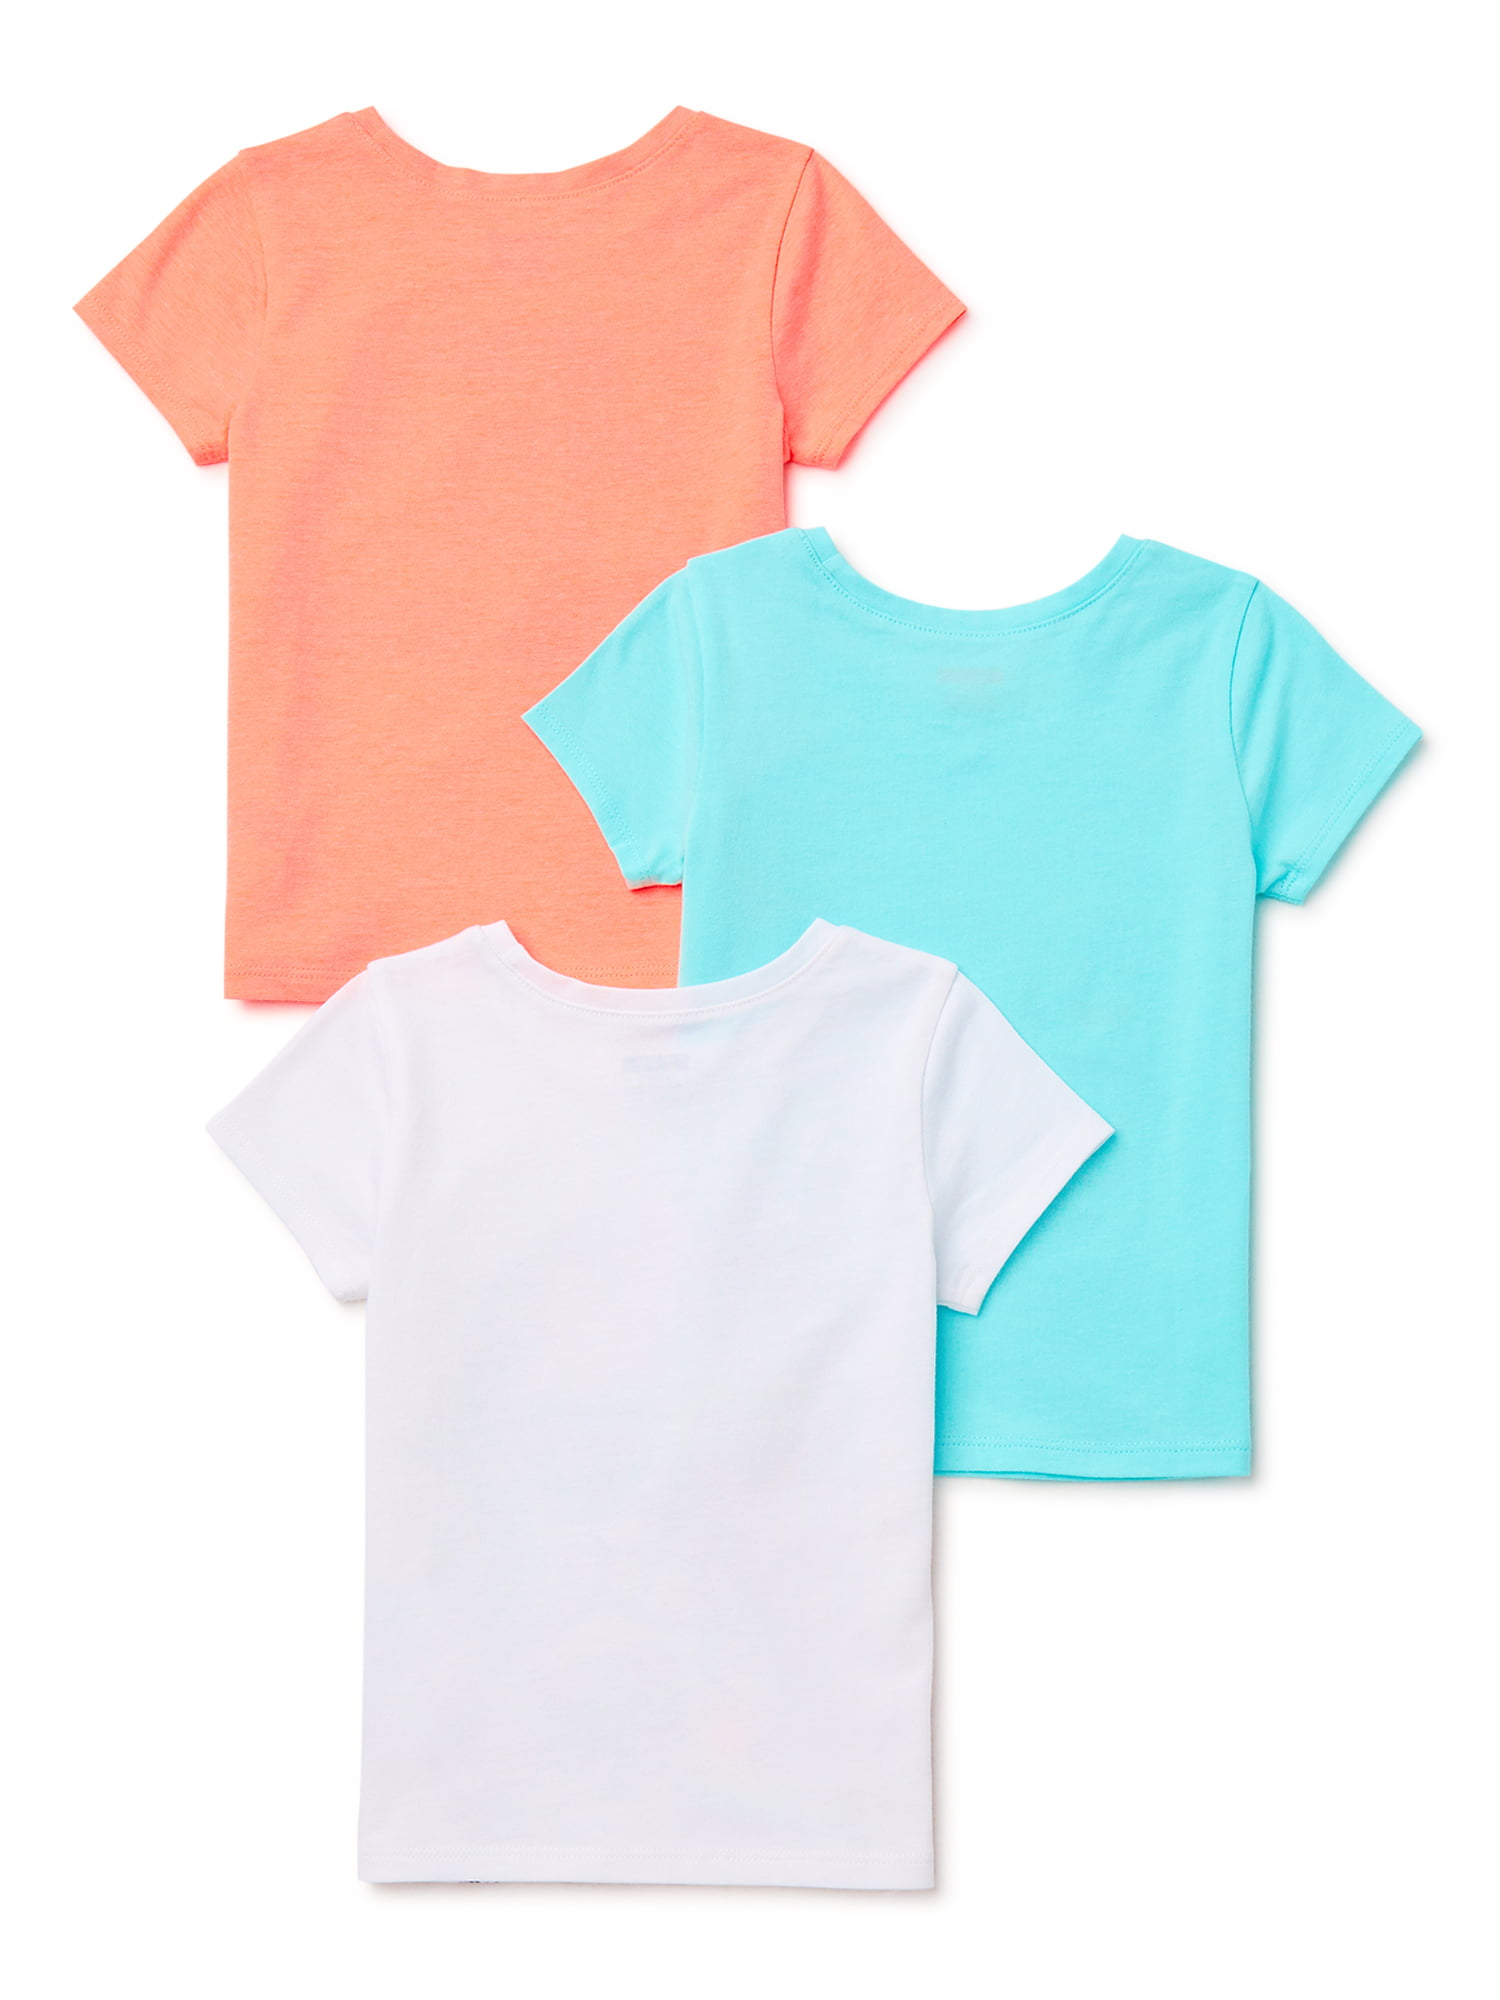 ZP-CCYF Gamers Life Toddler Baby Girl Ruffle Short Sleeve T-Shirt Comfortable Cotton T Shirts